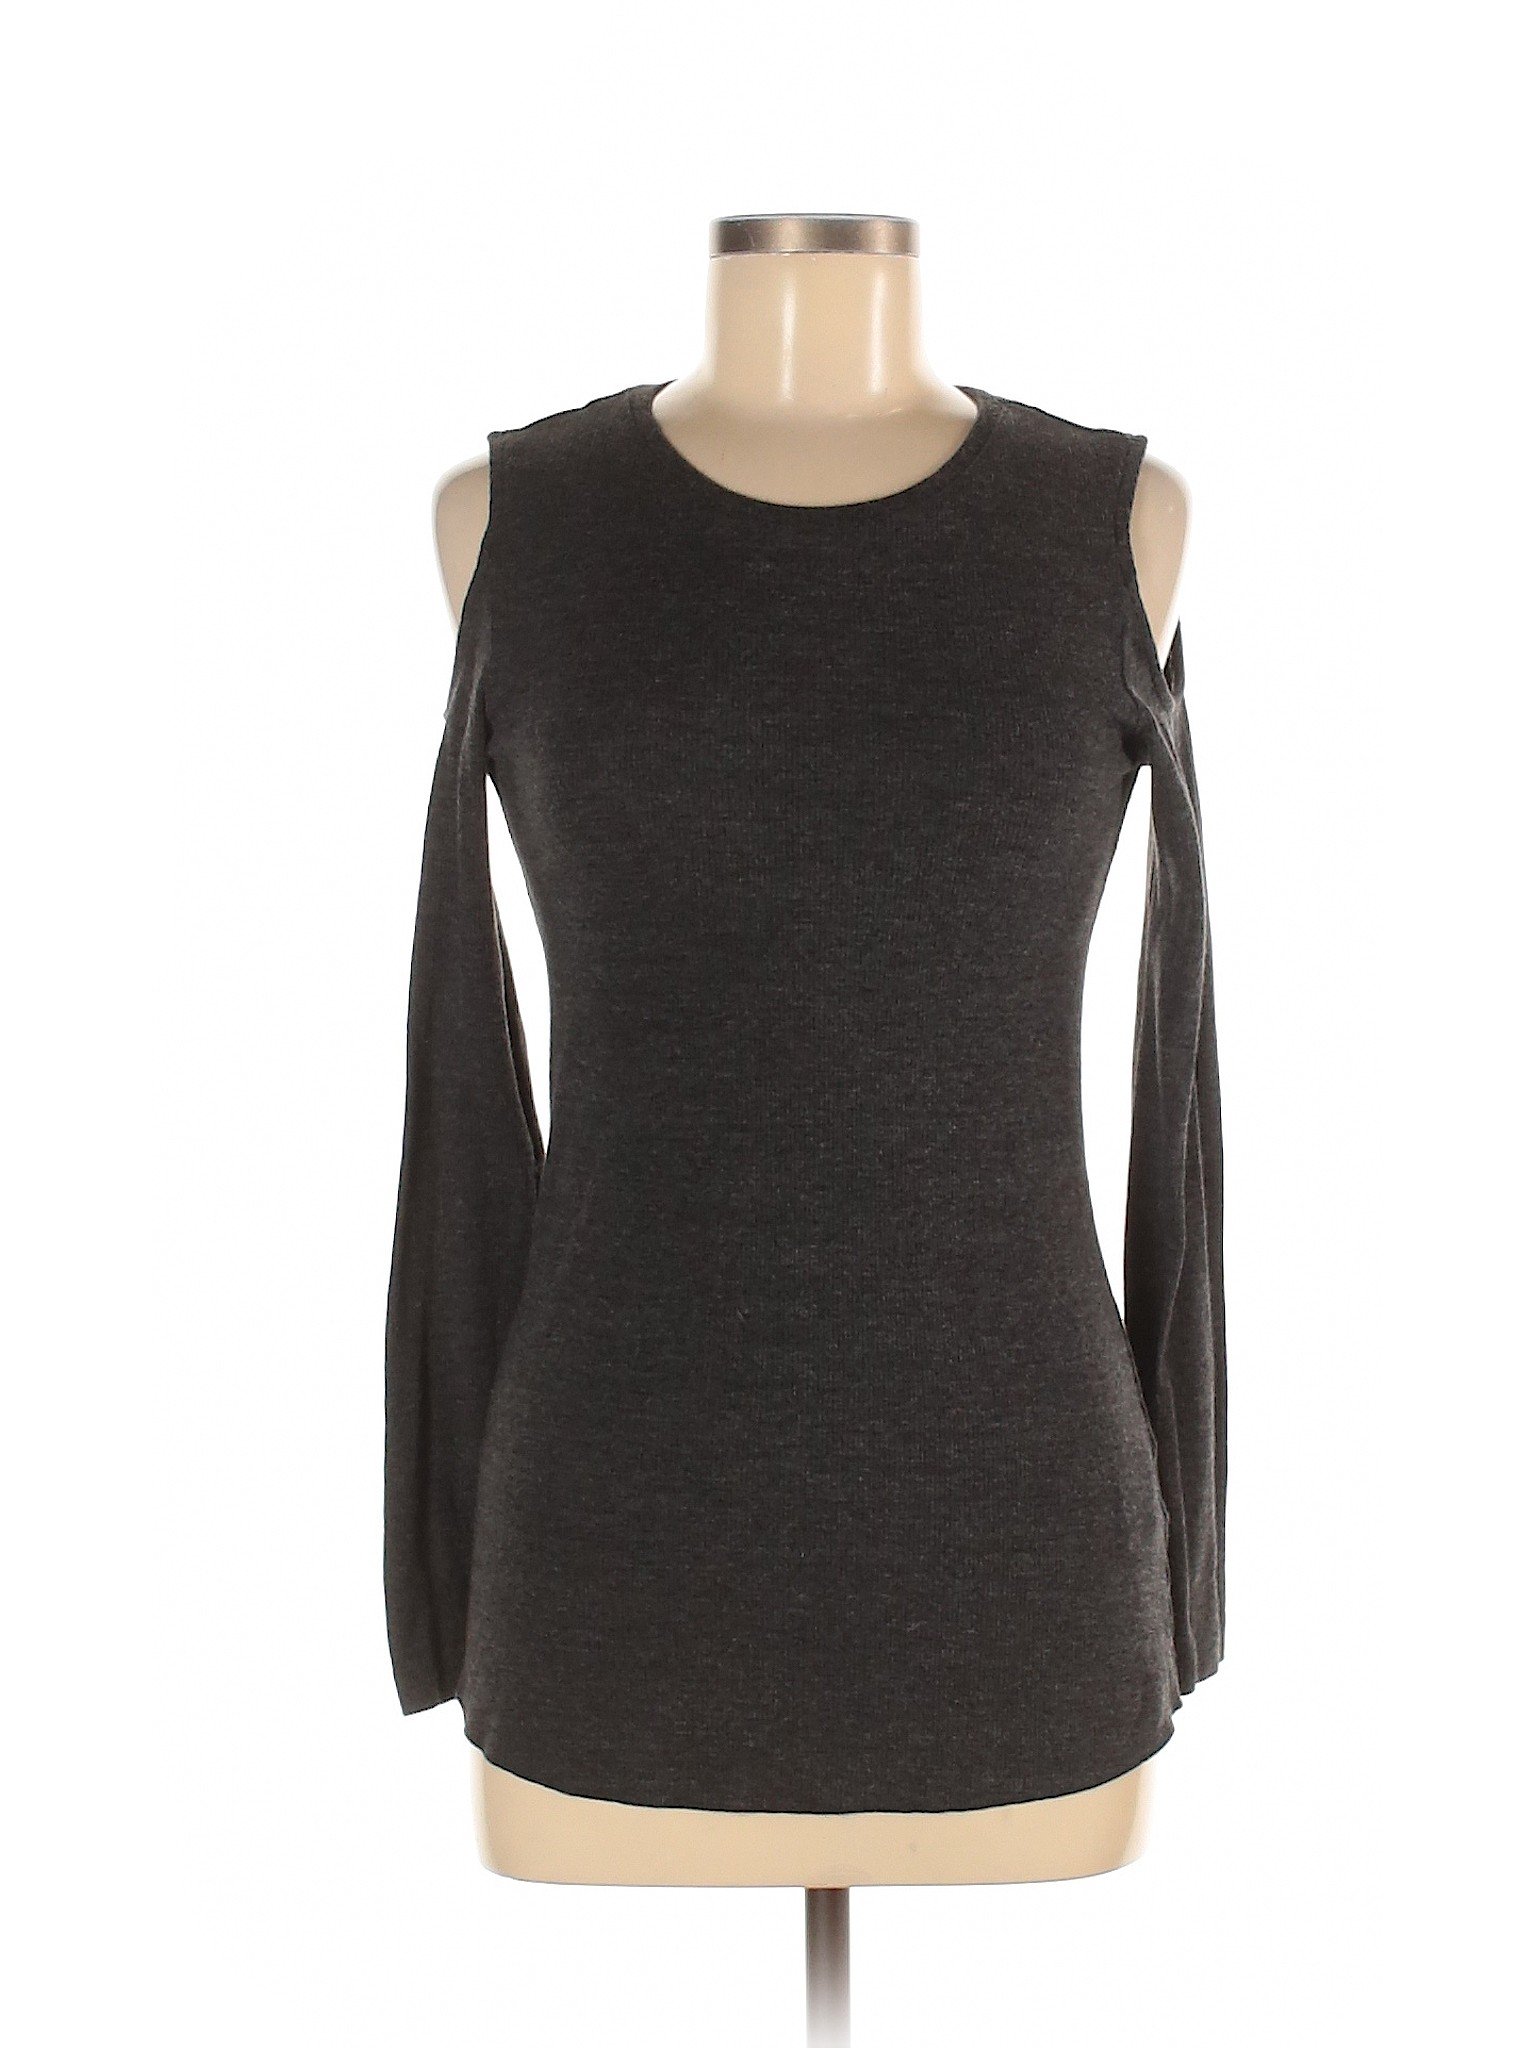 H&M Women Gray Long Sleeve Top M | eBay